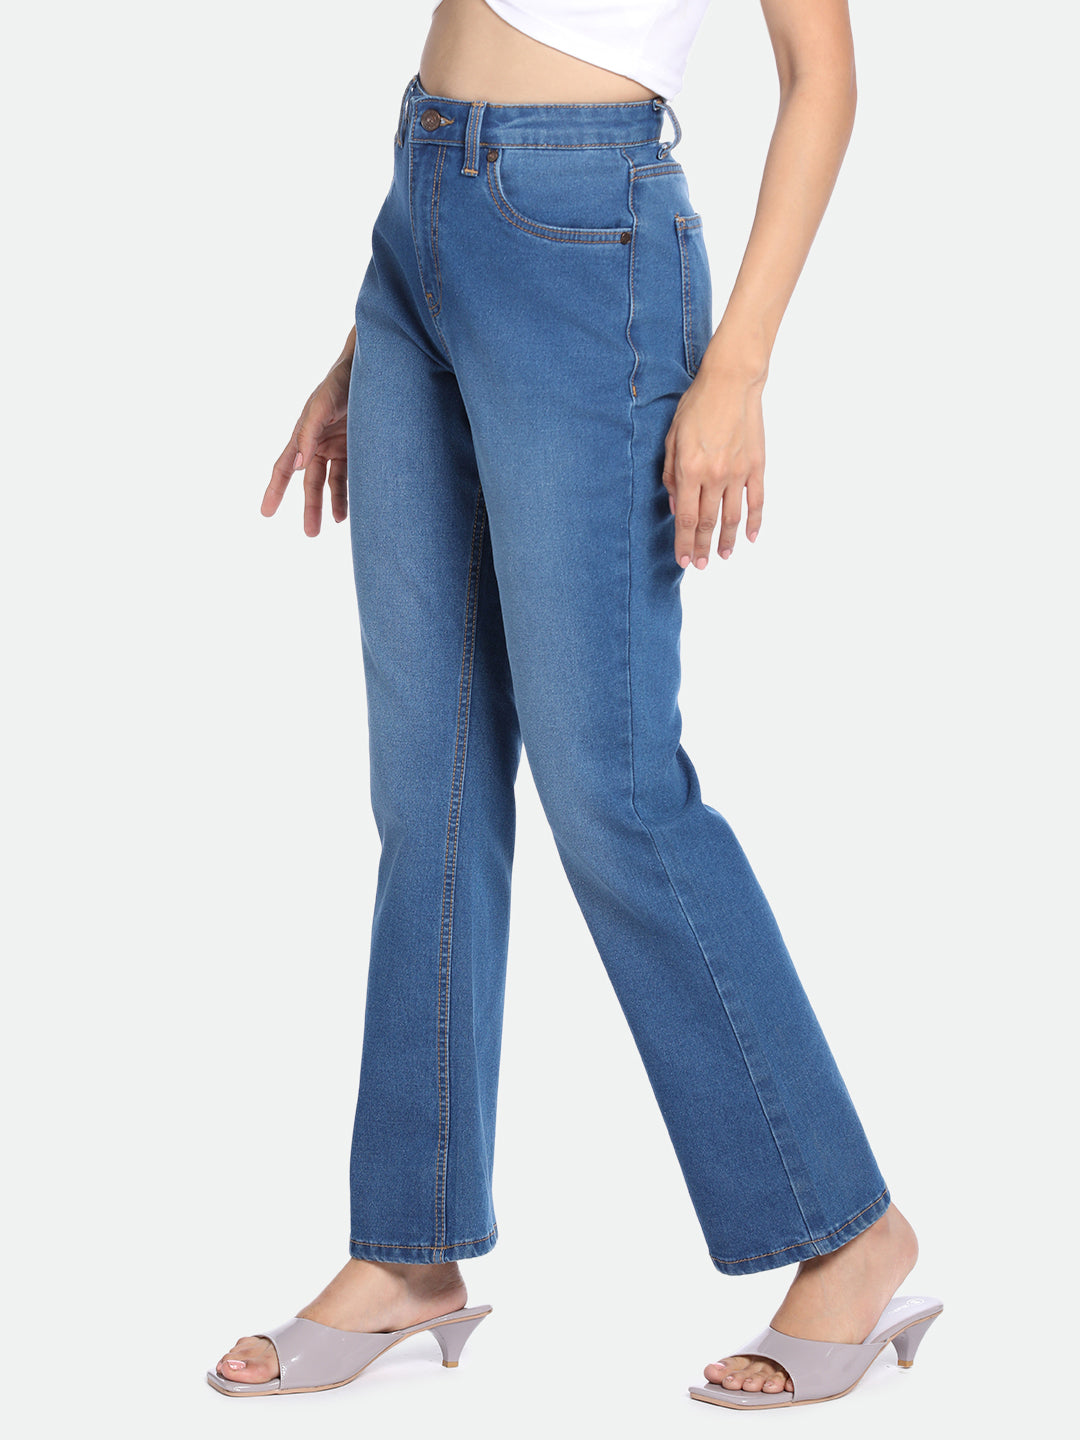 DL Woman Indigo Cotton Bootcut Jeans